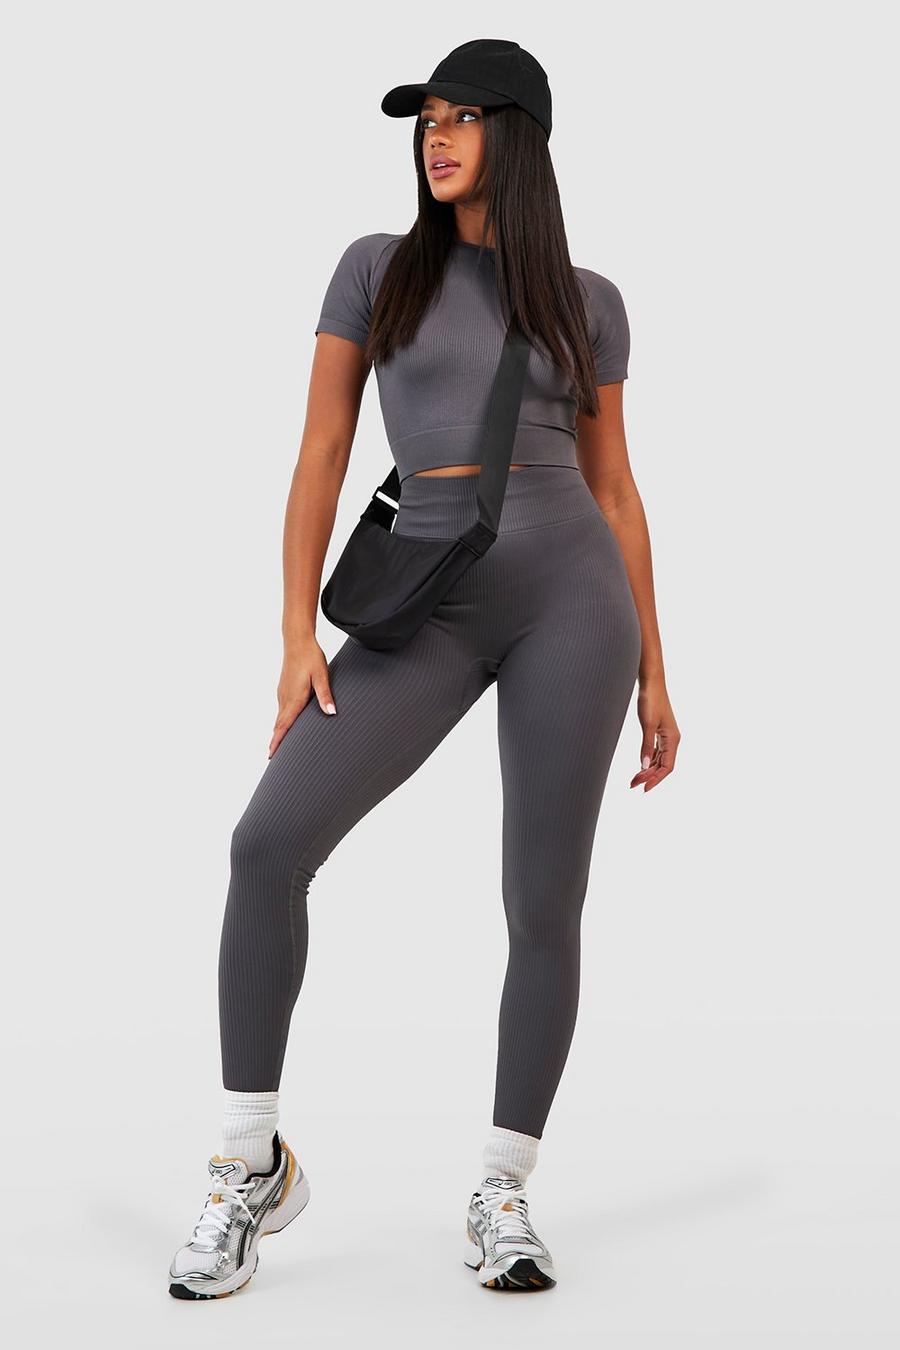 Dfyne - impact leggings on Designer Wardrobe